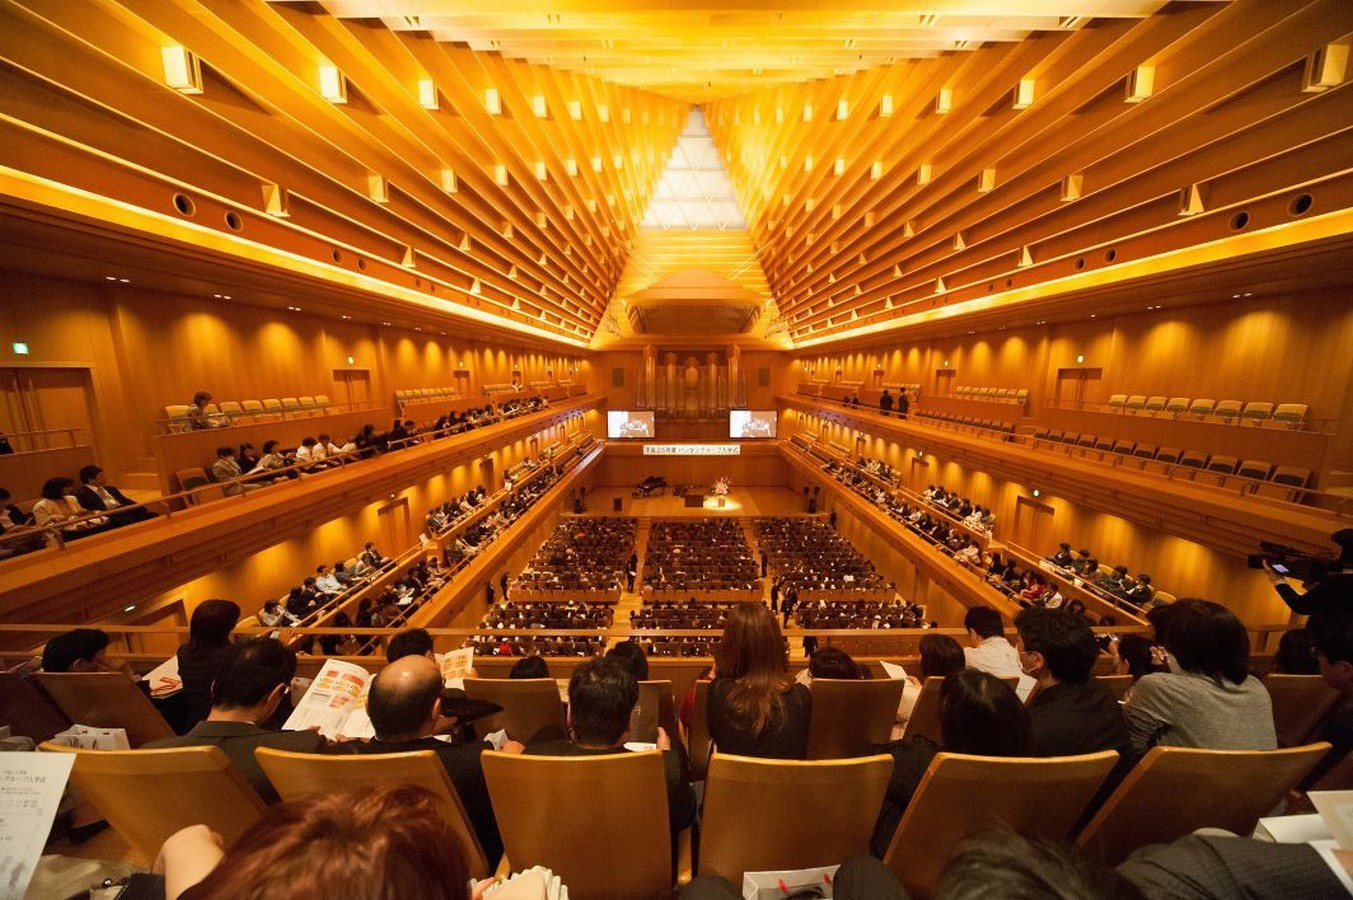 Tokyo Opera City Concert Hall by Takahiko Yanagisawa: The Perfect Pitch - Sheet4